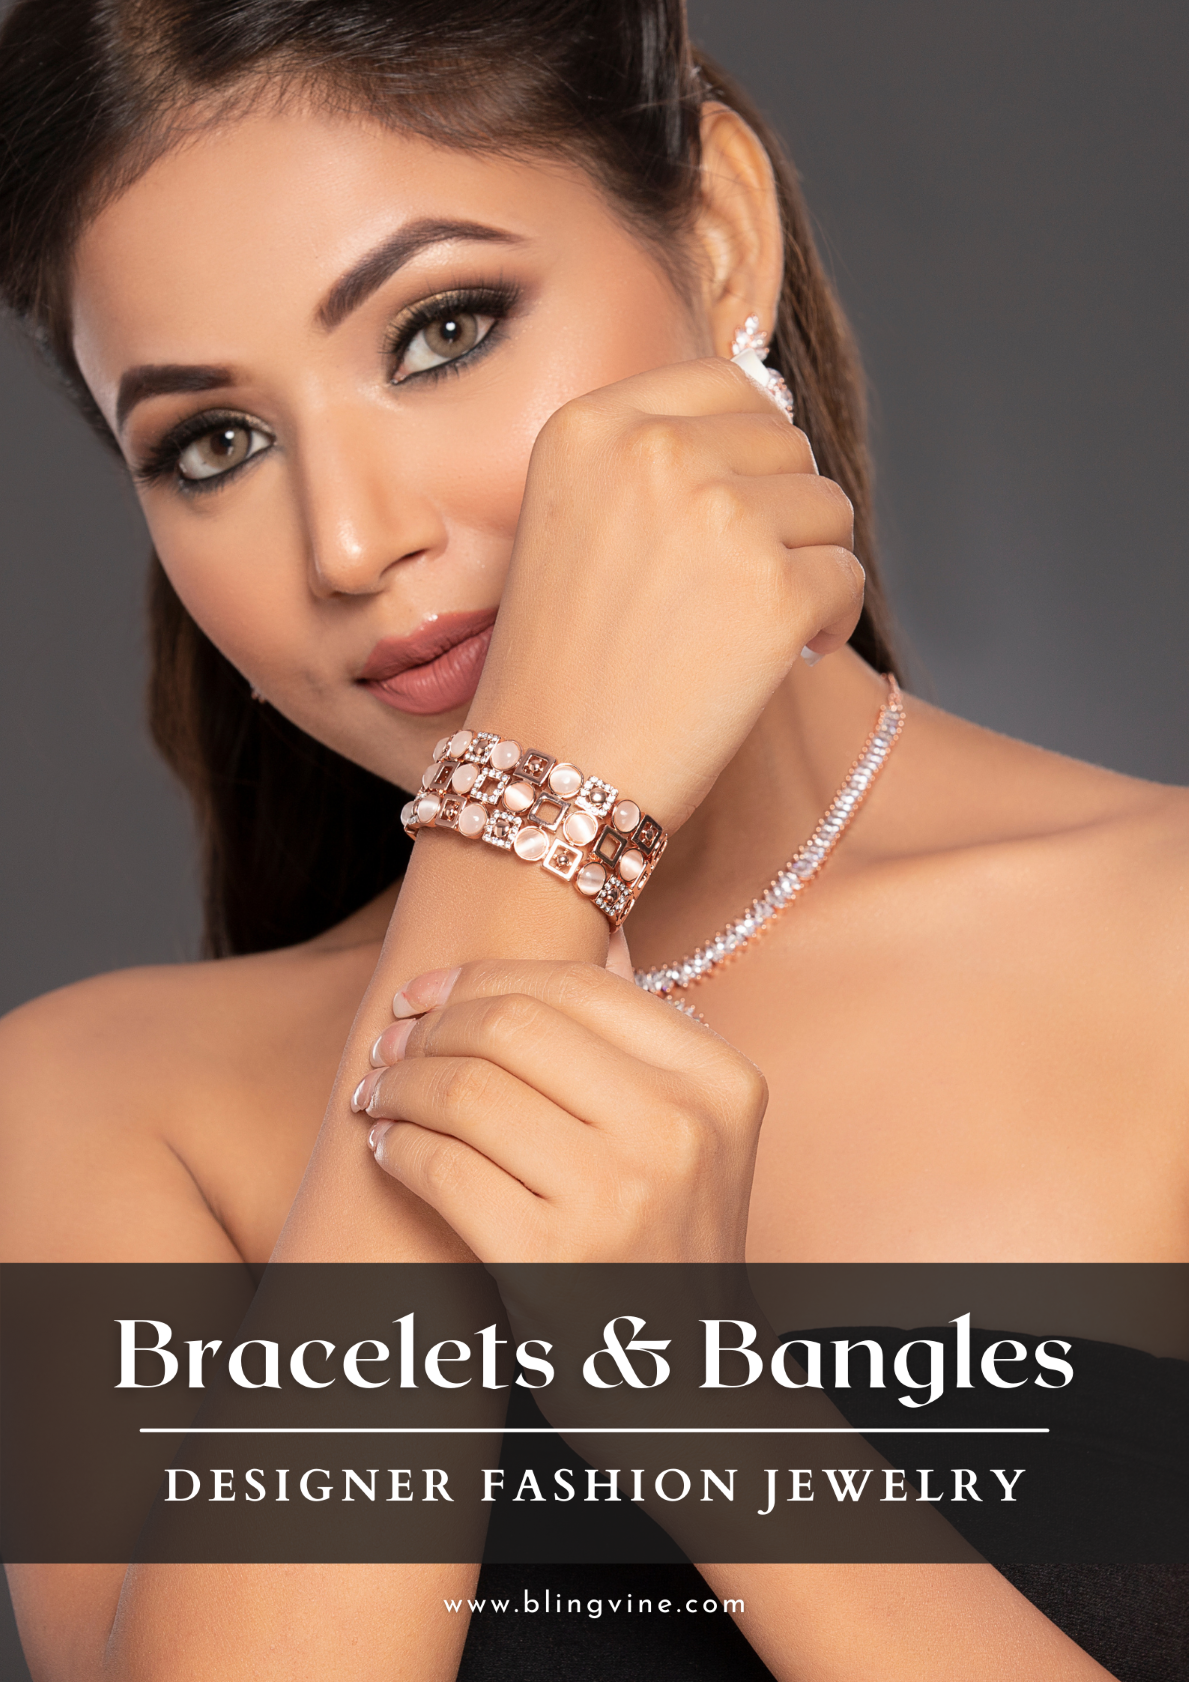 American Diamond Chain Bracelet for Gowns and Dresses - Jeenal Crystal  Bracelet by Blingvine